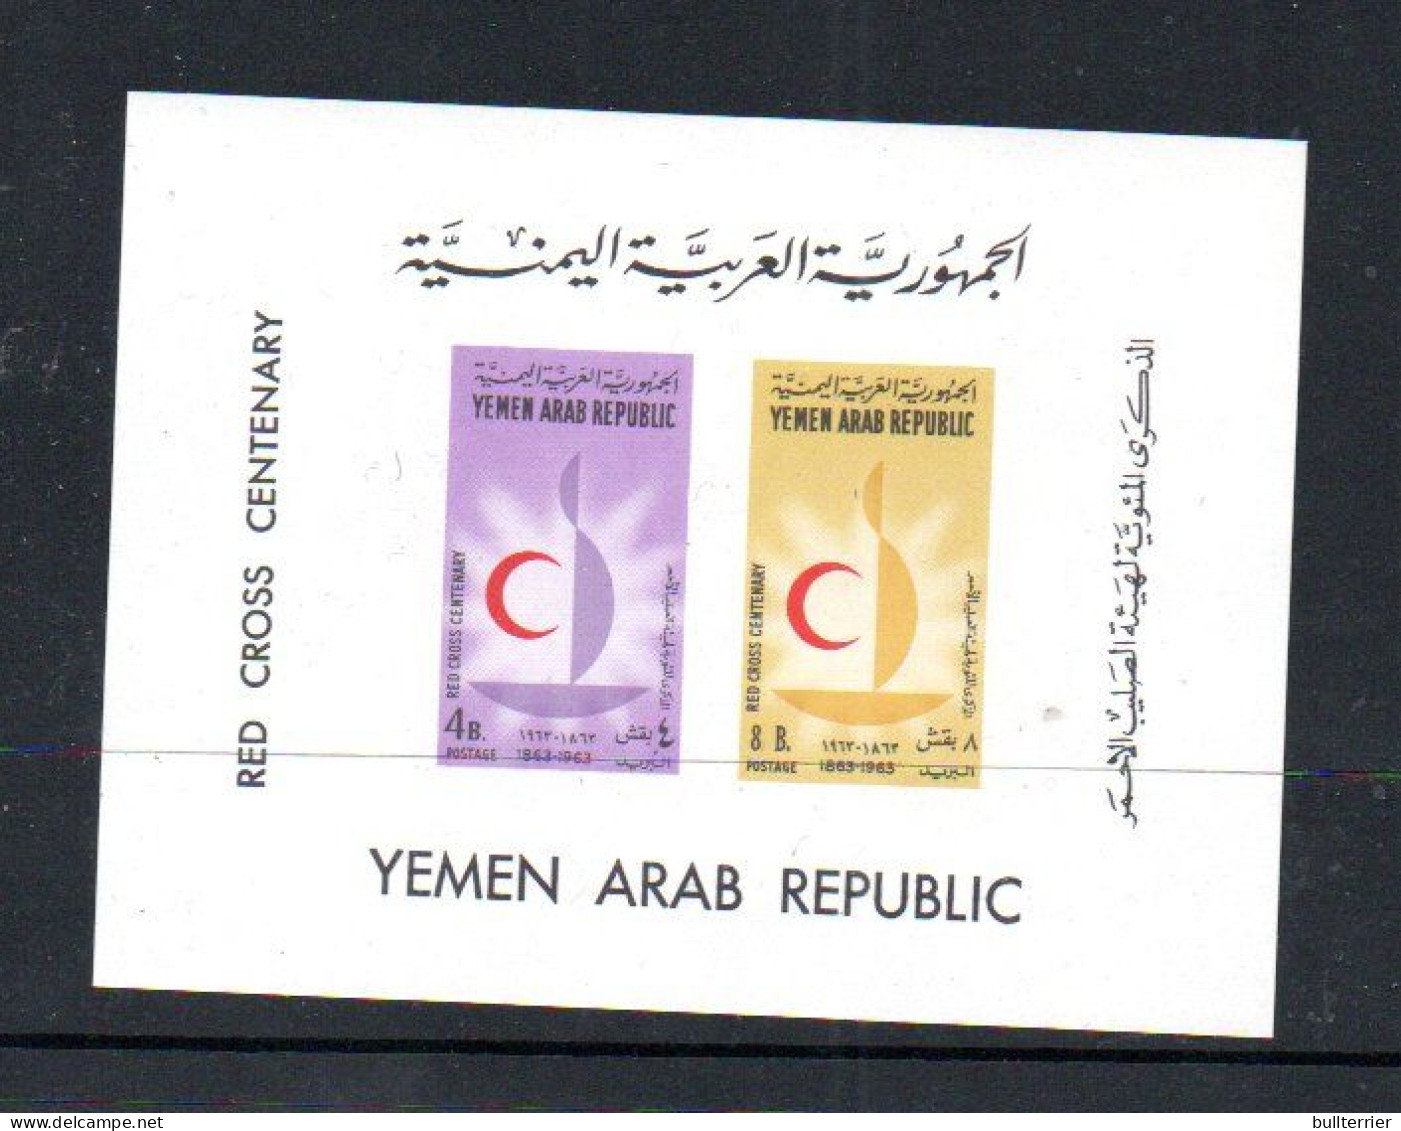 MEDICINE - YEMEN ARAB REPUBLIC - 1963 - RED CROSS CENTENARY  S/SHEET MINT NEVER HINGED SG £22 - Medicine